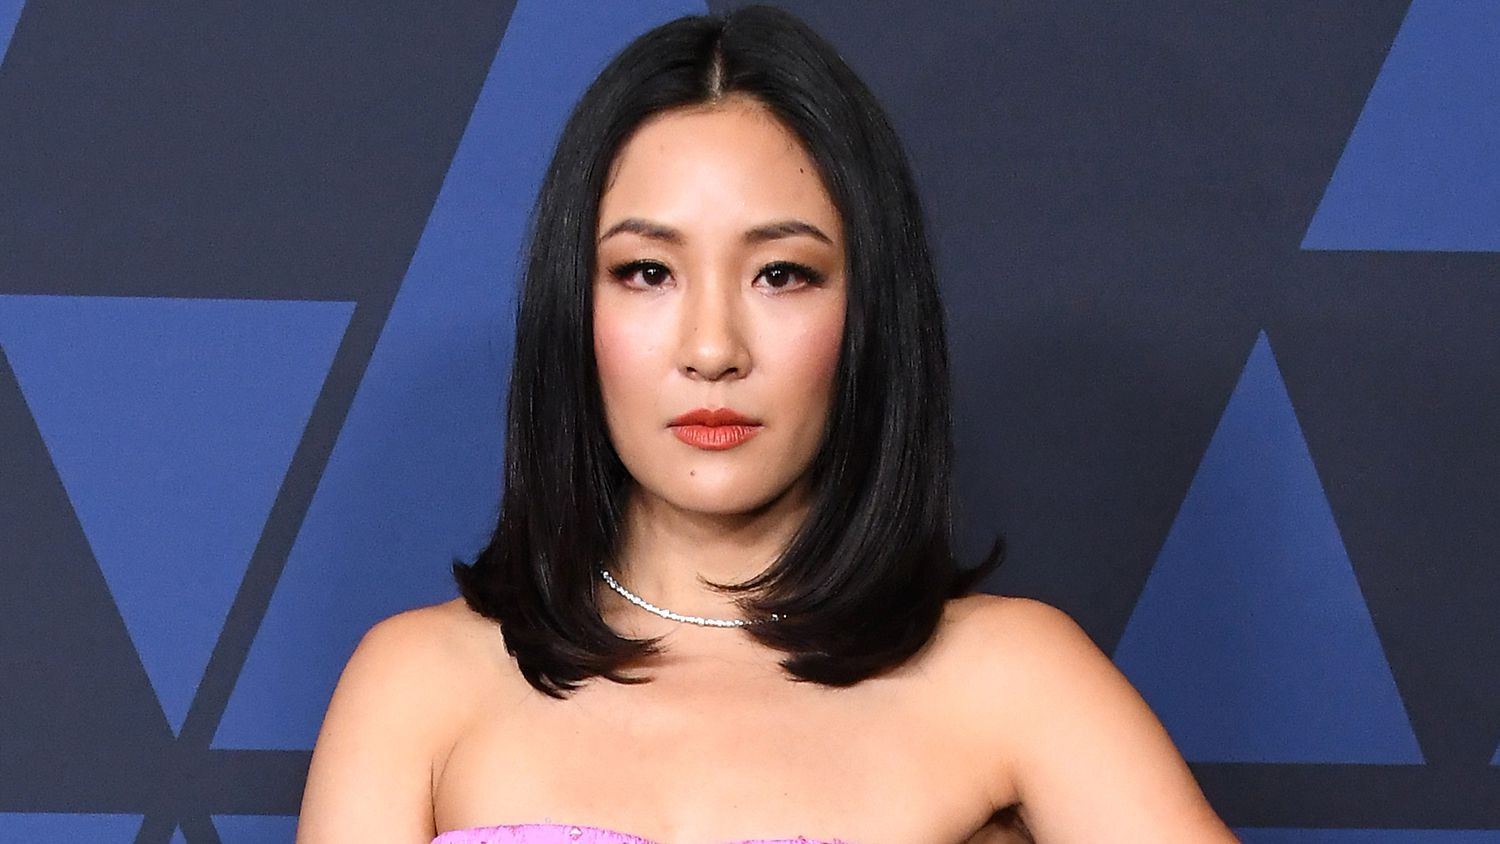 Pemain "Crazy Rich Asians" Constance Wu Pernah Alami Pelecehan Seksual Oleh Produser